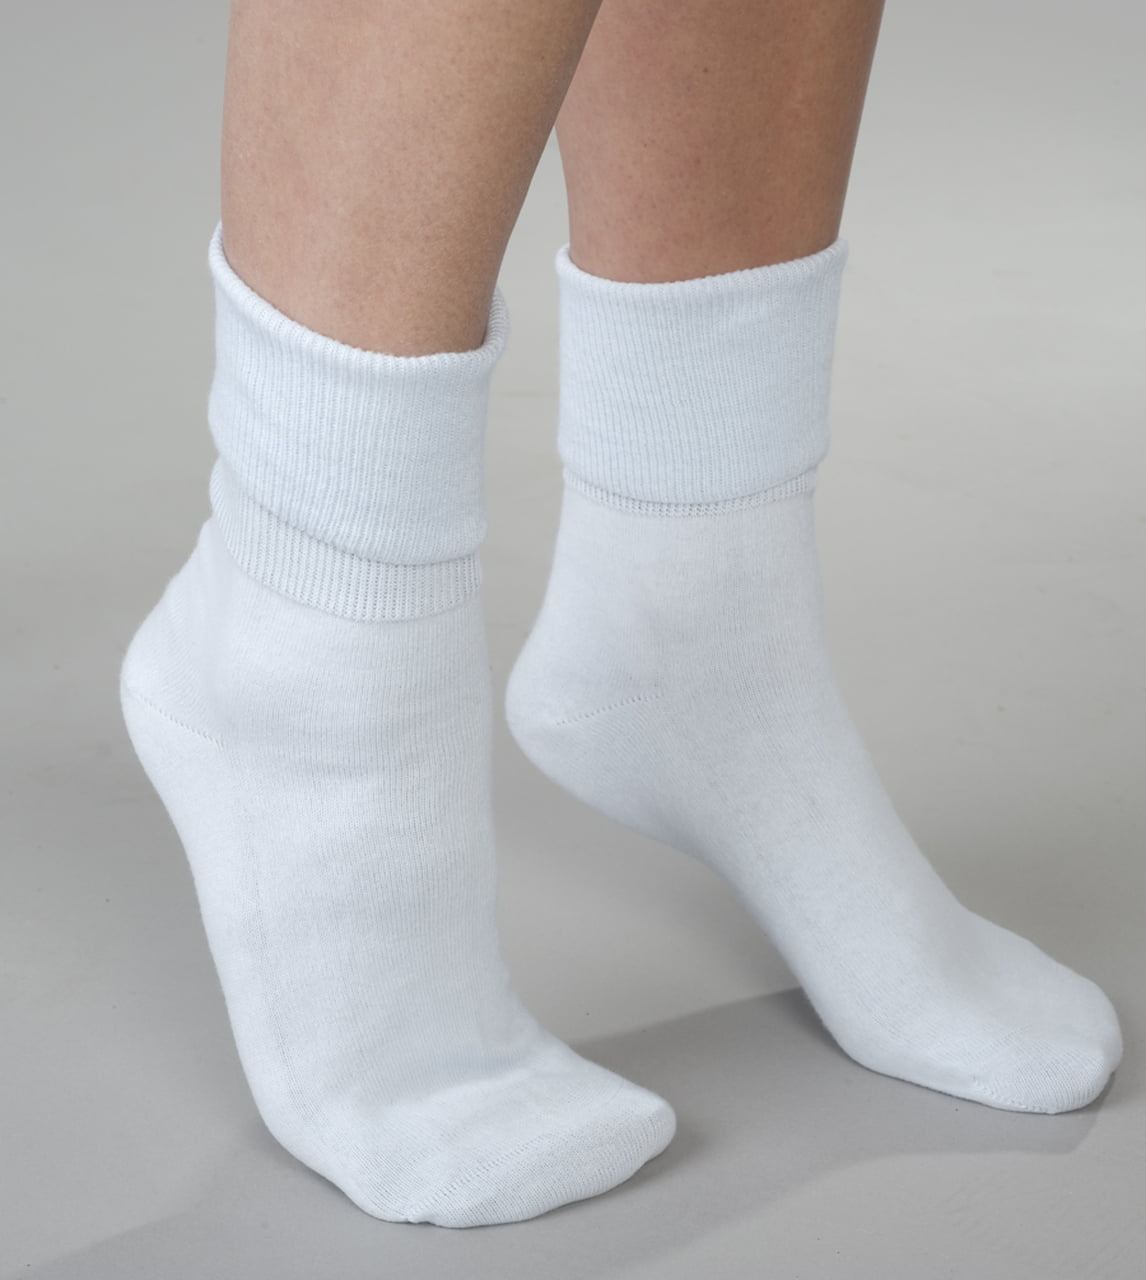 Buster Brown Women's Socks Cotton Foldover Cuff Socks, White 3-Pack 